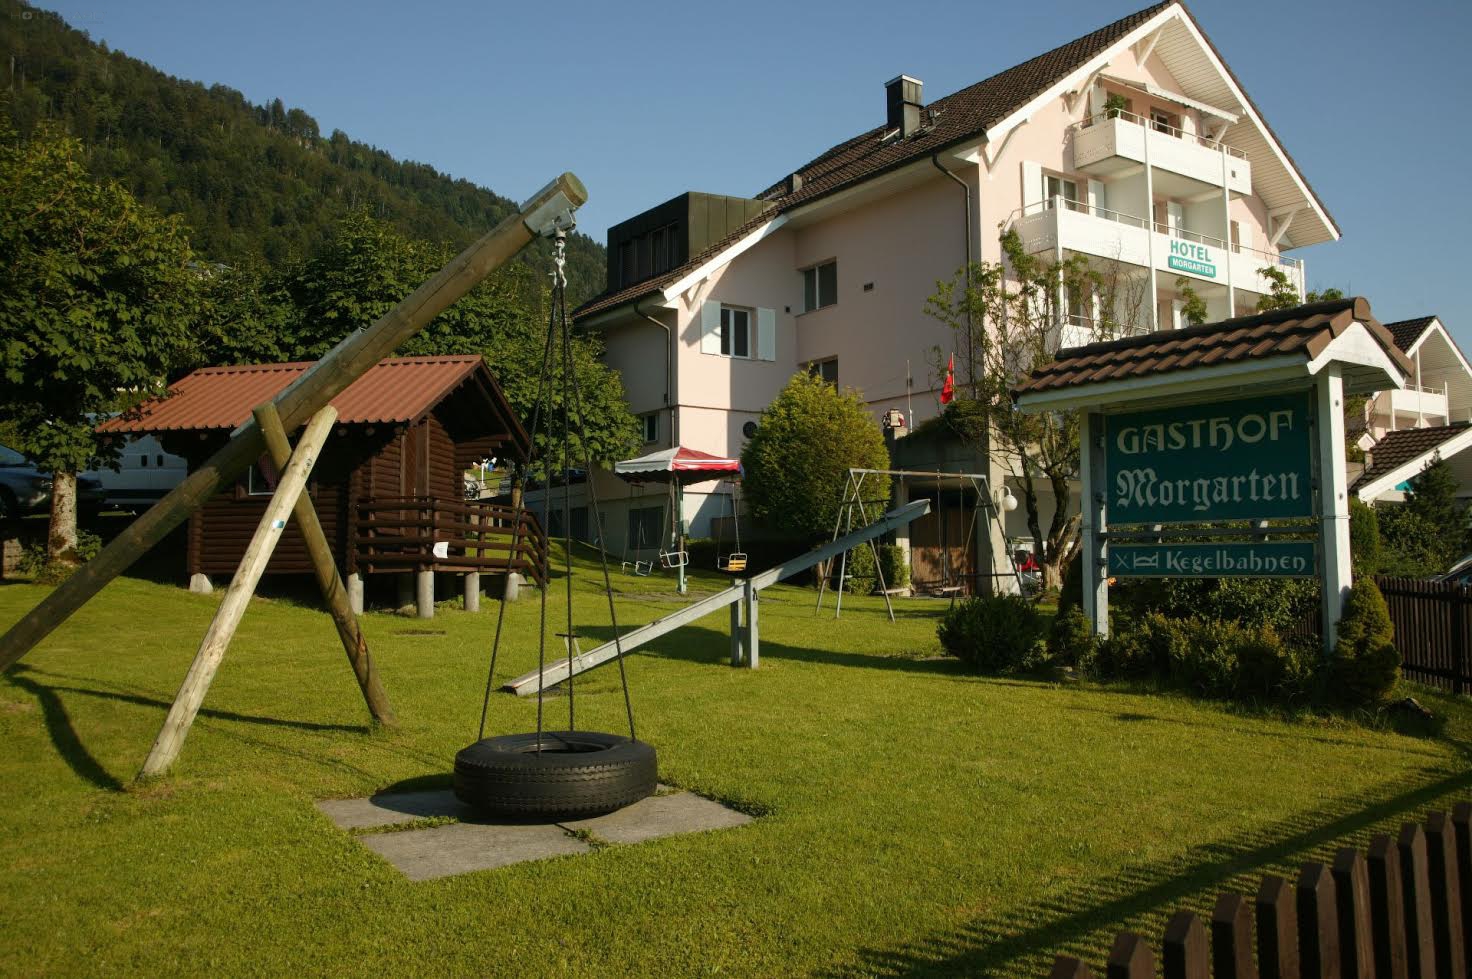 Hotel Restaurant Morgarten, Sattelstrasse 1 in Morgarten